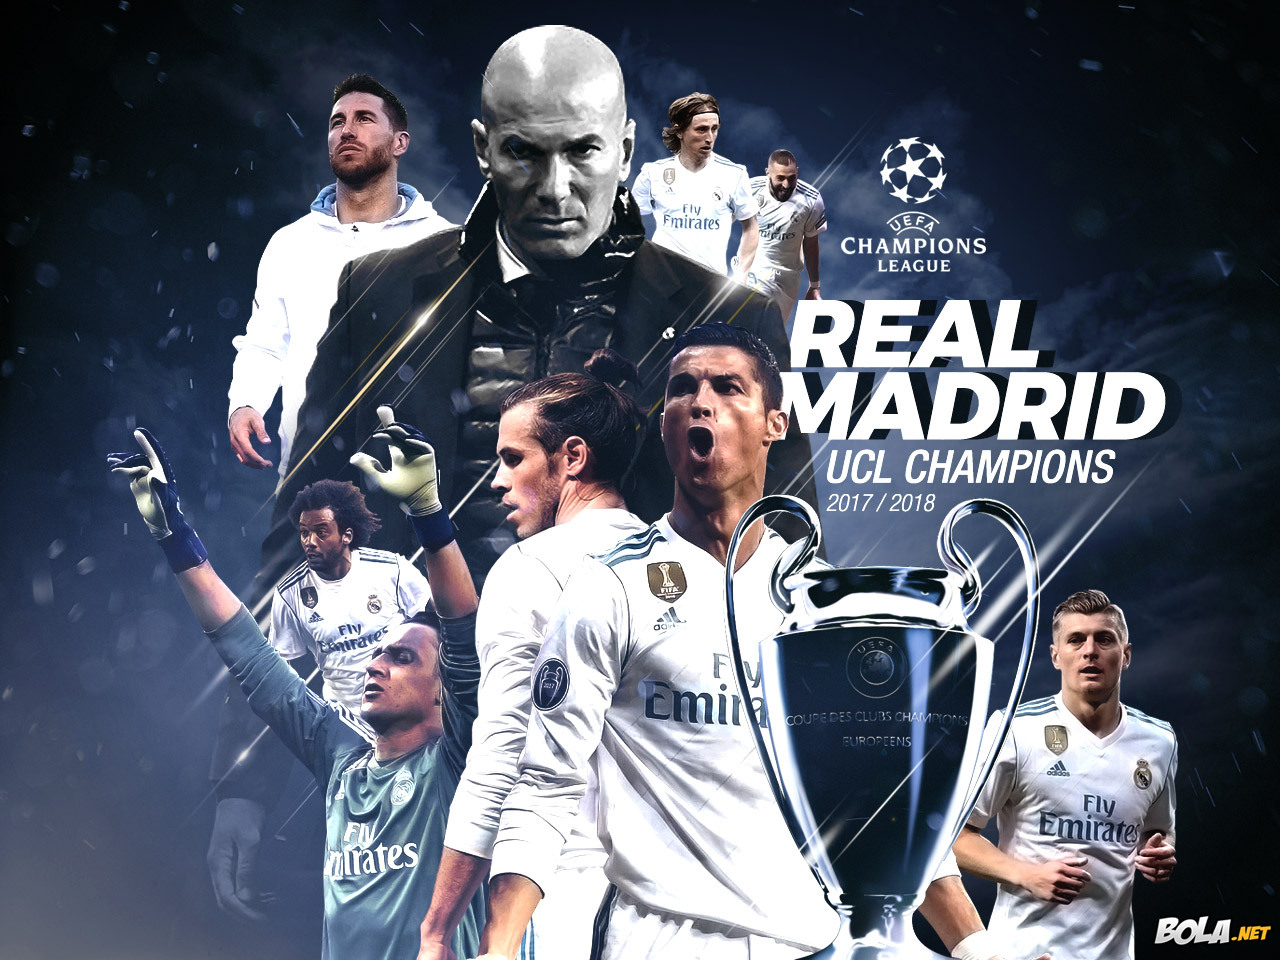 Deskripsi : Wallpaper Real Madrid, Ucl Winner 2017/201, size: 1280x960